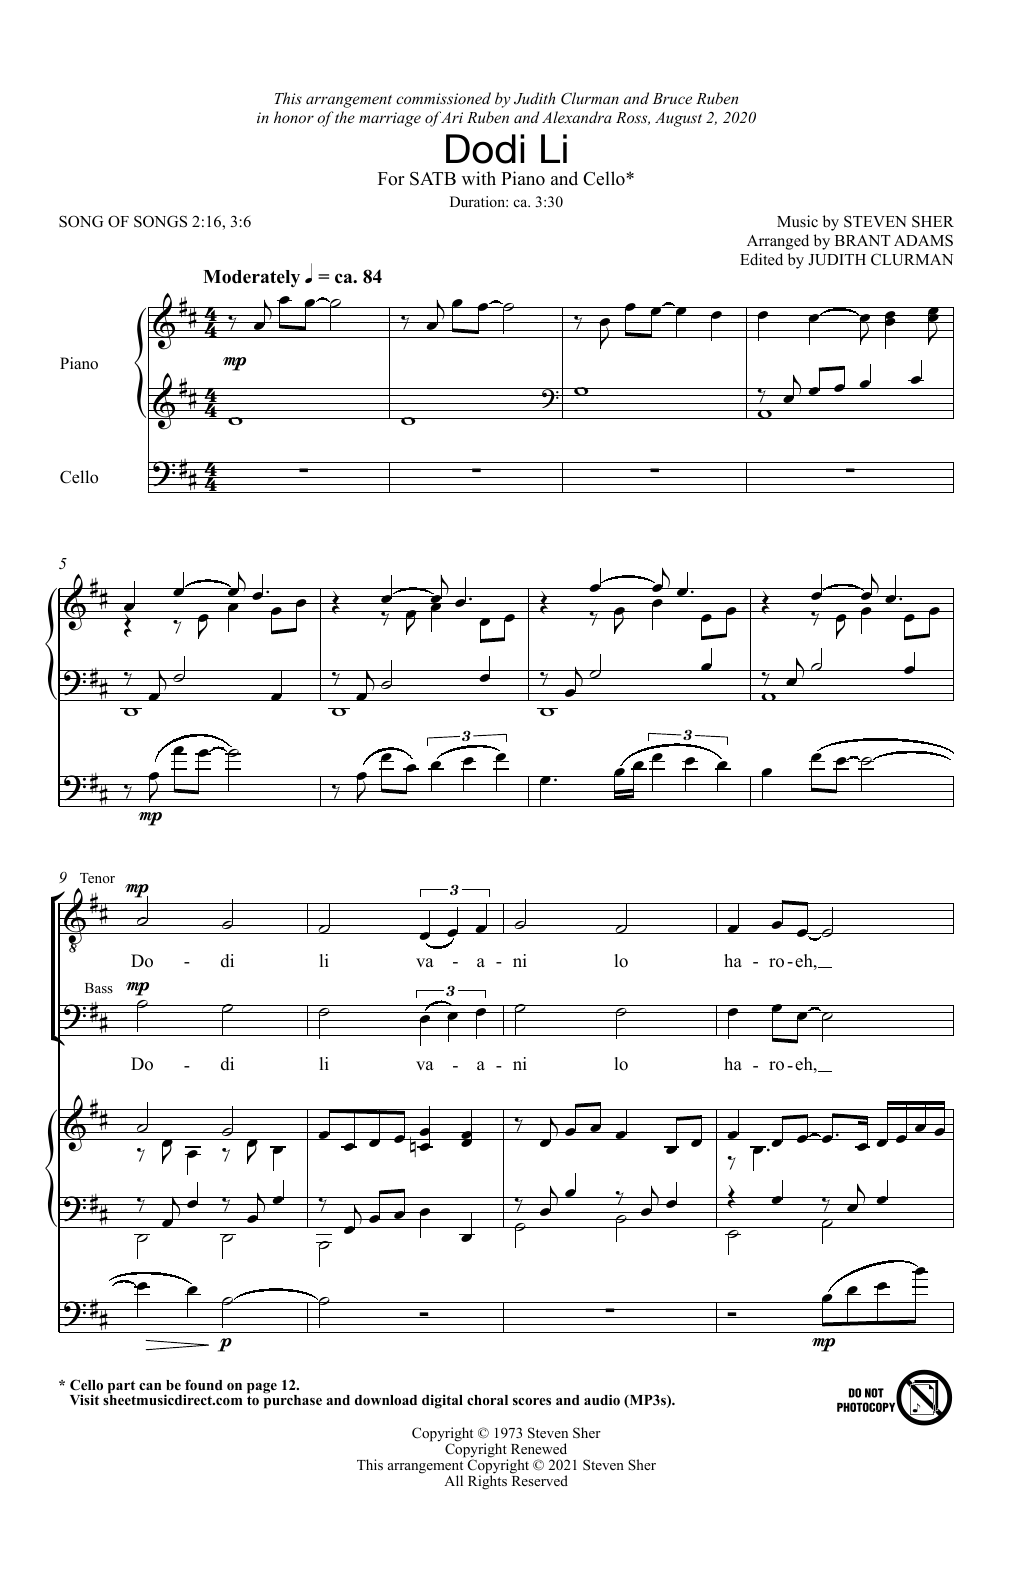 Steven Sher Dodi Li (arr. Brant Adams) Sheet Music Notes & Chords for SATB Choir - Download or Print PDF